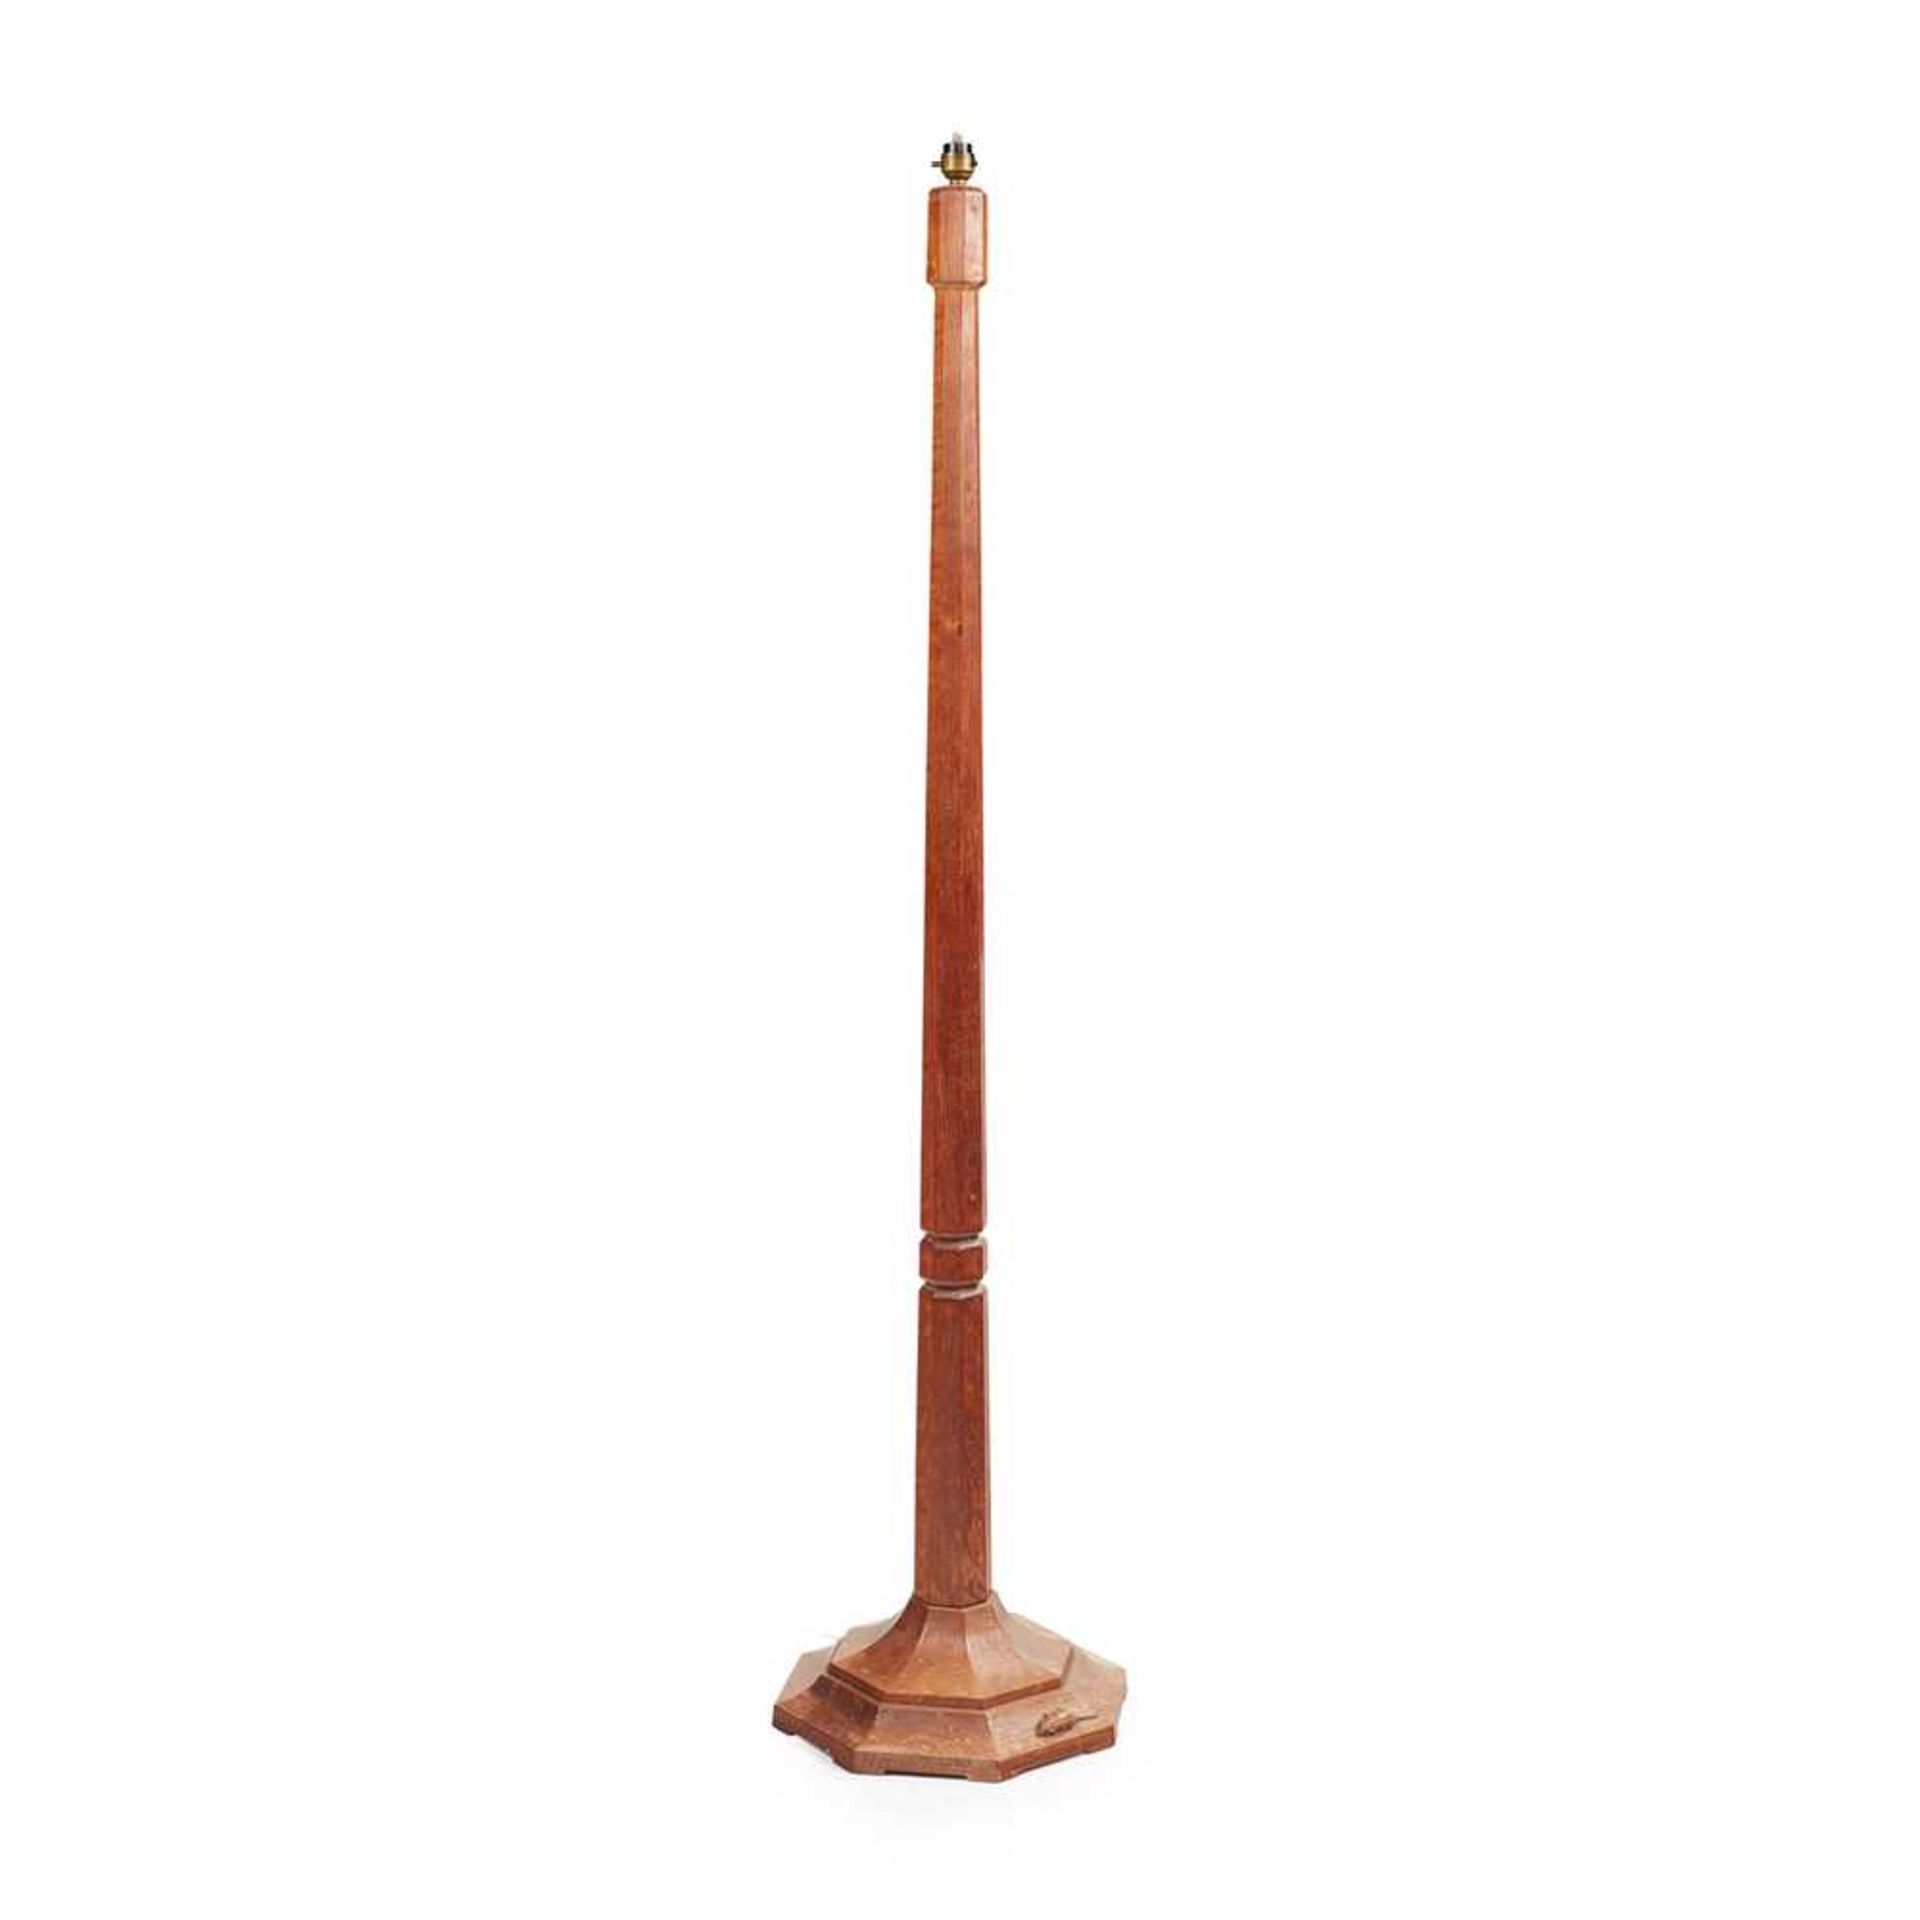 ROBERT 'MOUSEMAN' THOMPSON (1876-1955) STANDARD LAMP, CIRCA 1930